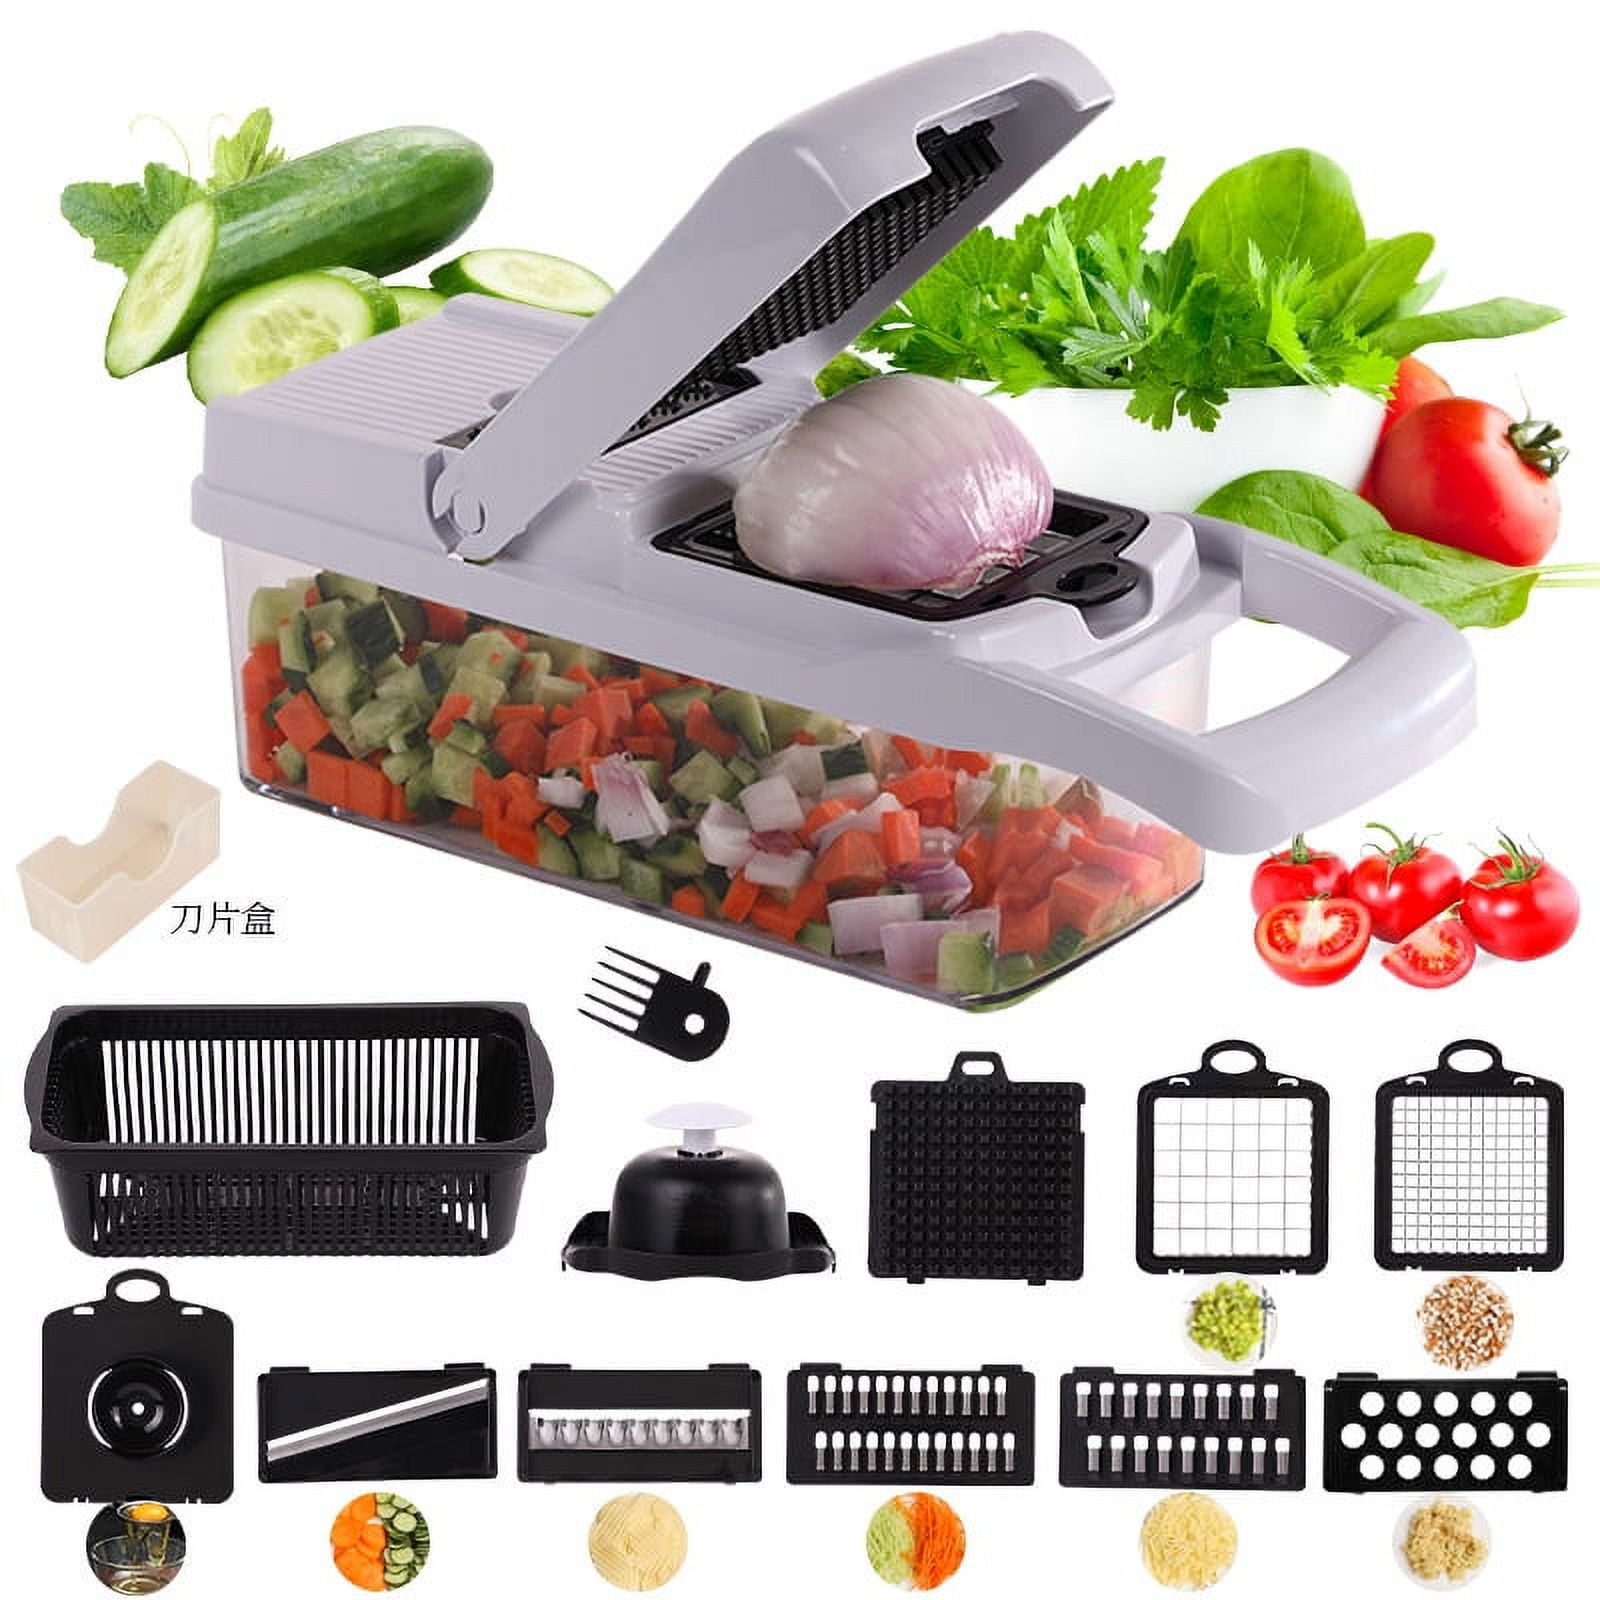 $4/mo - Finance 9-in-1 Vegetable Chopper & Mandoline Slicer for